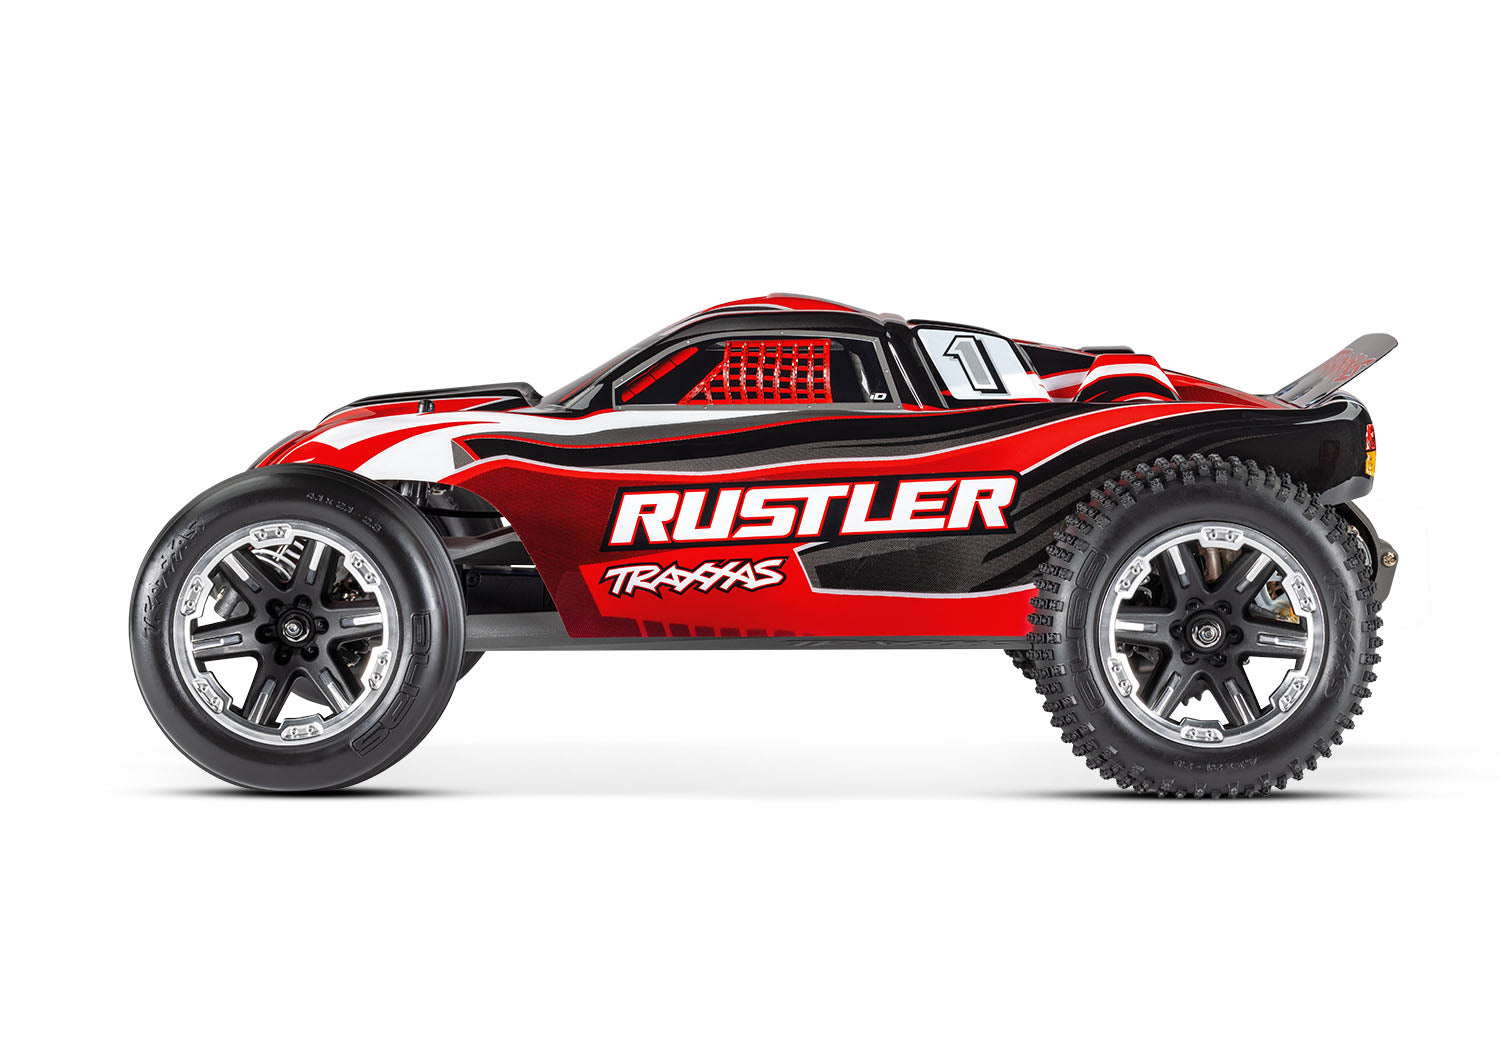 Rustler®: 1/10 Scale Stadium Truck with TQ™ 2.4 GHz radio system